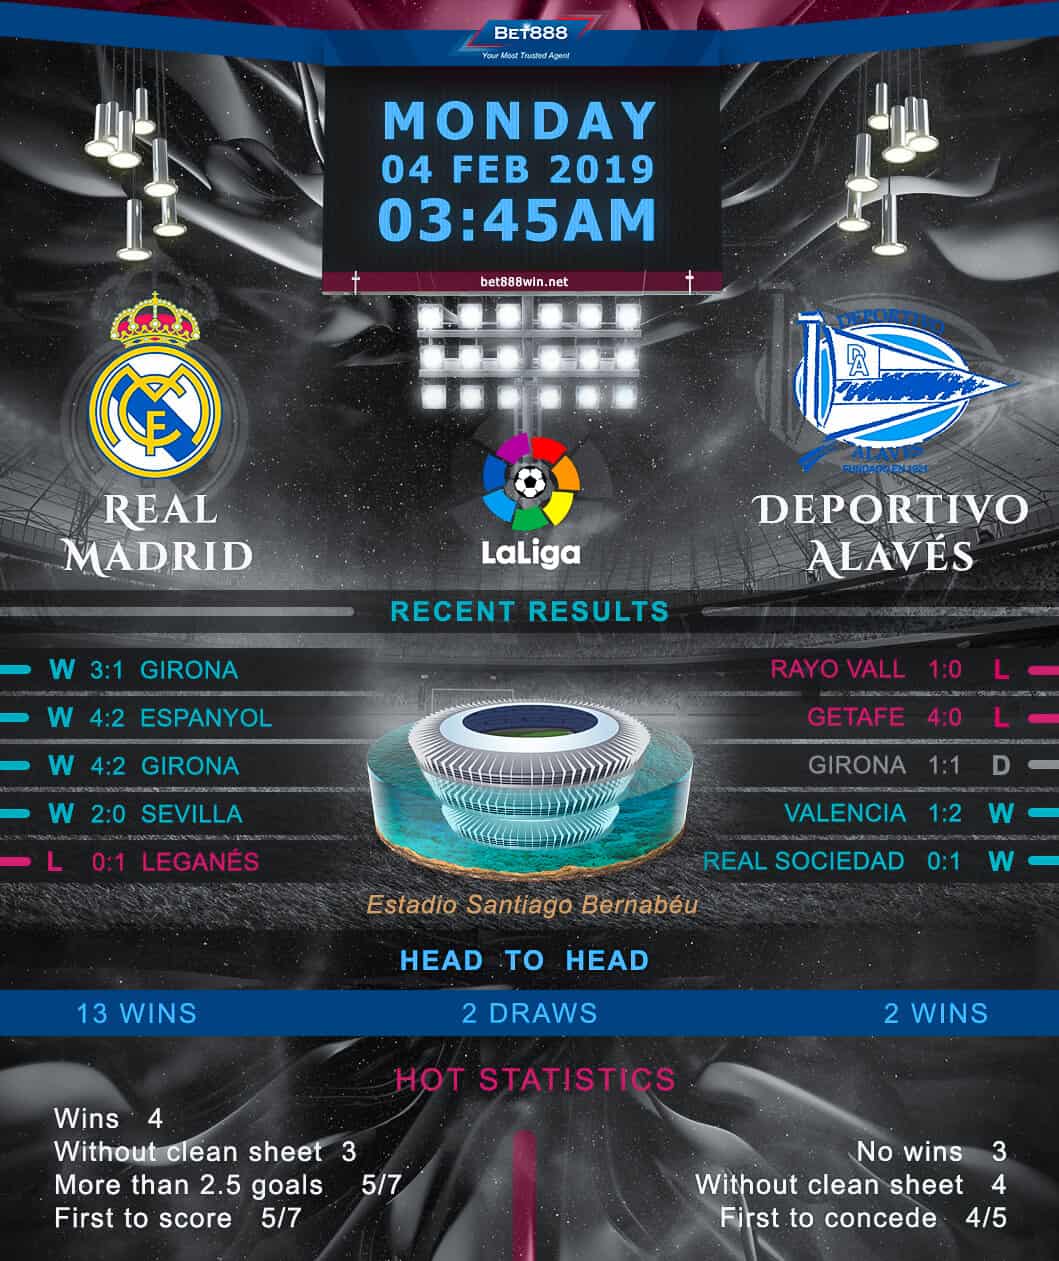 Real Madrid vs Deportivo Alaves 04/02/19